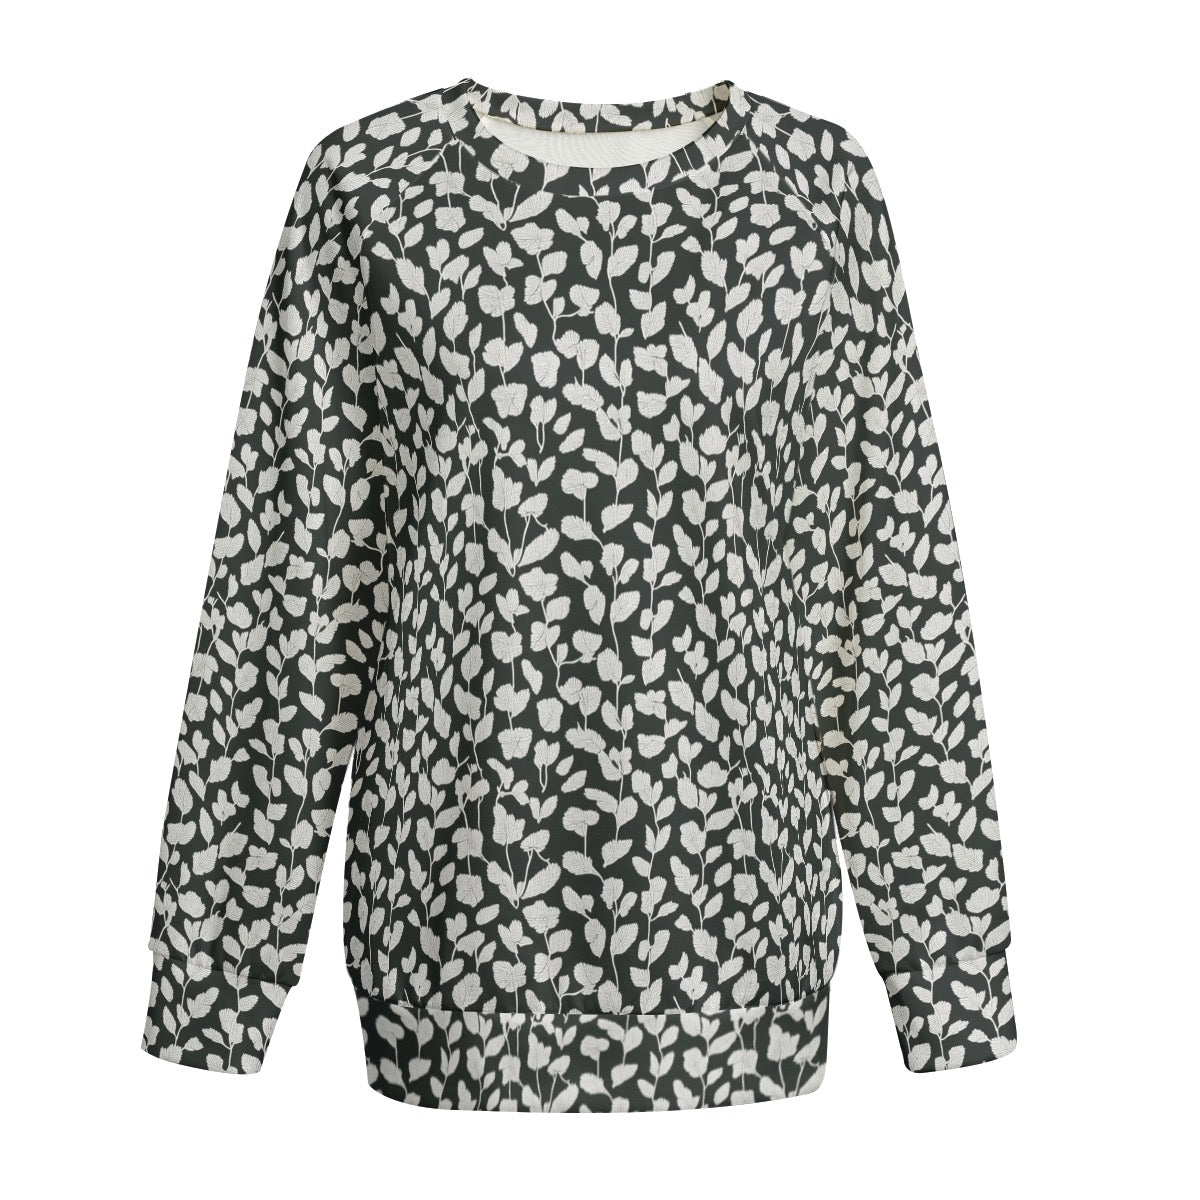 B&W Leaves -- Women's Sweatshirt With Raglan Sleeve | Interlock